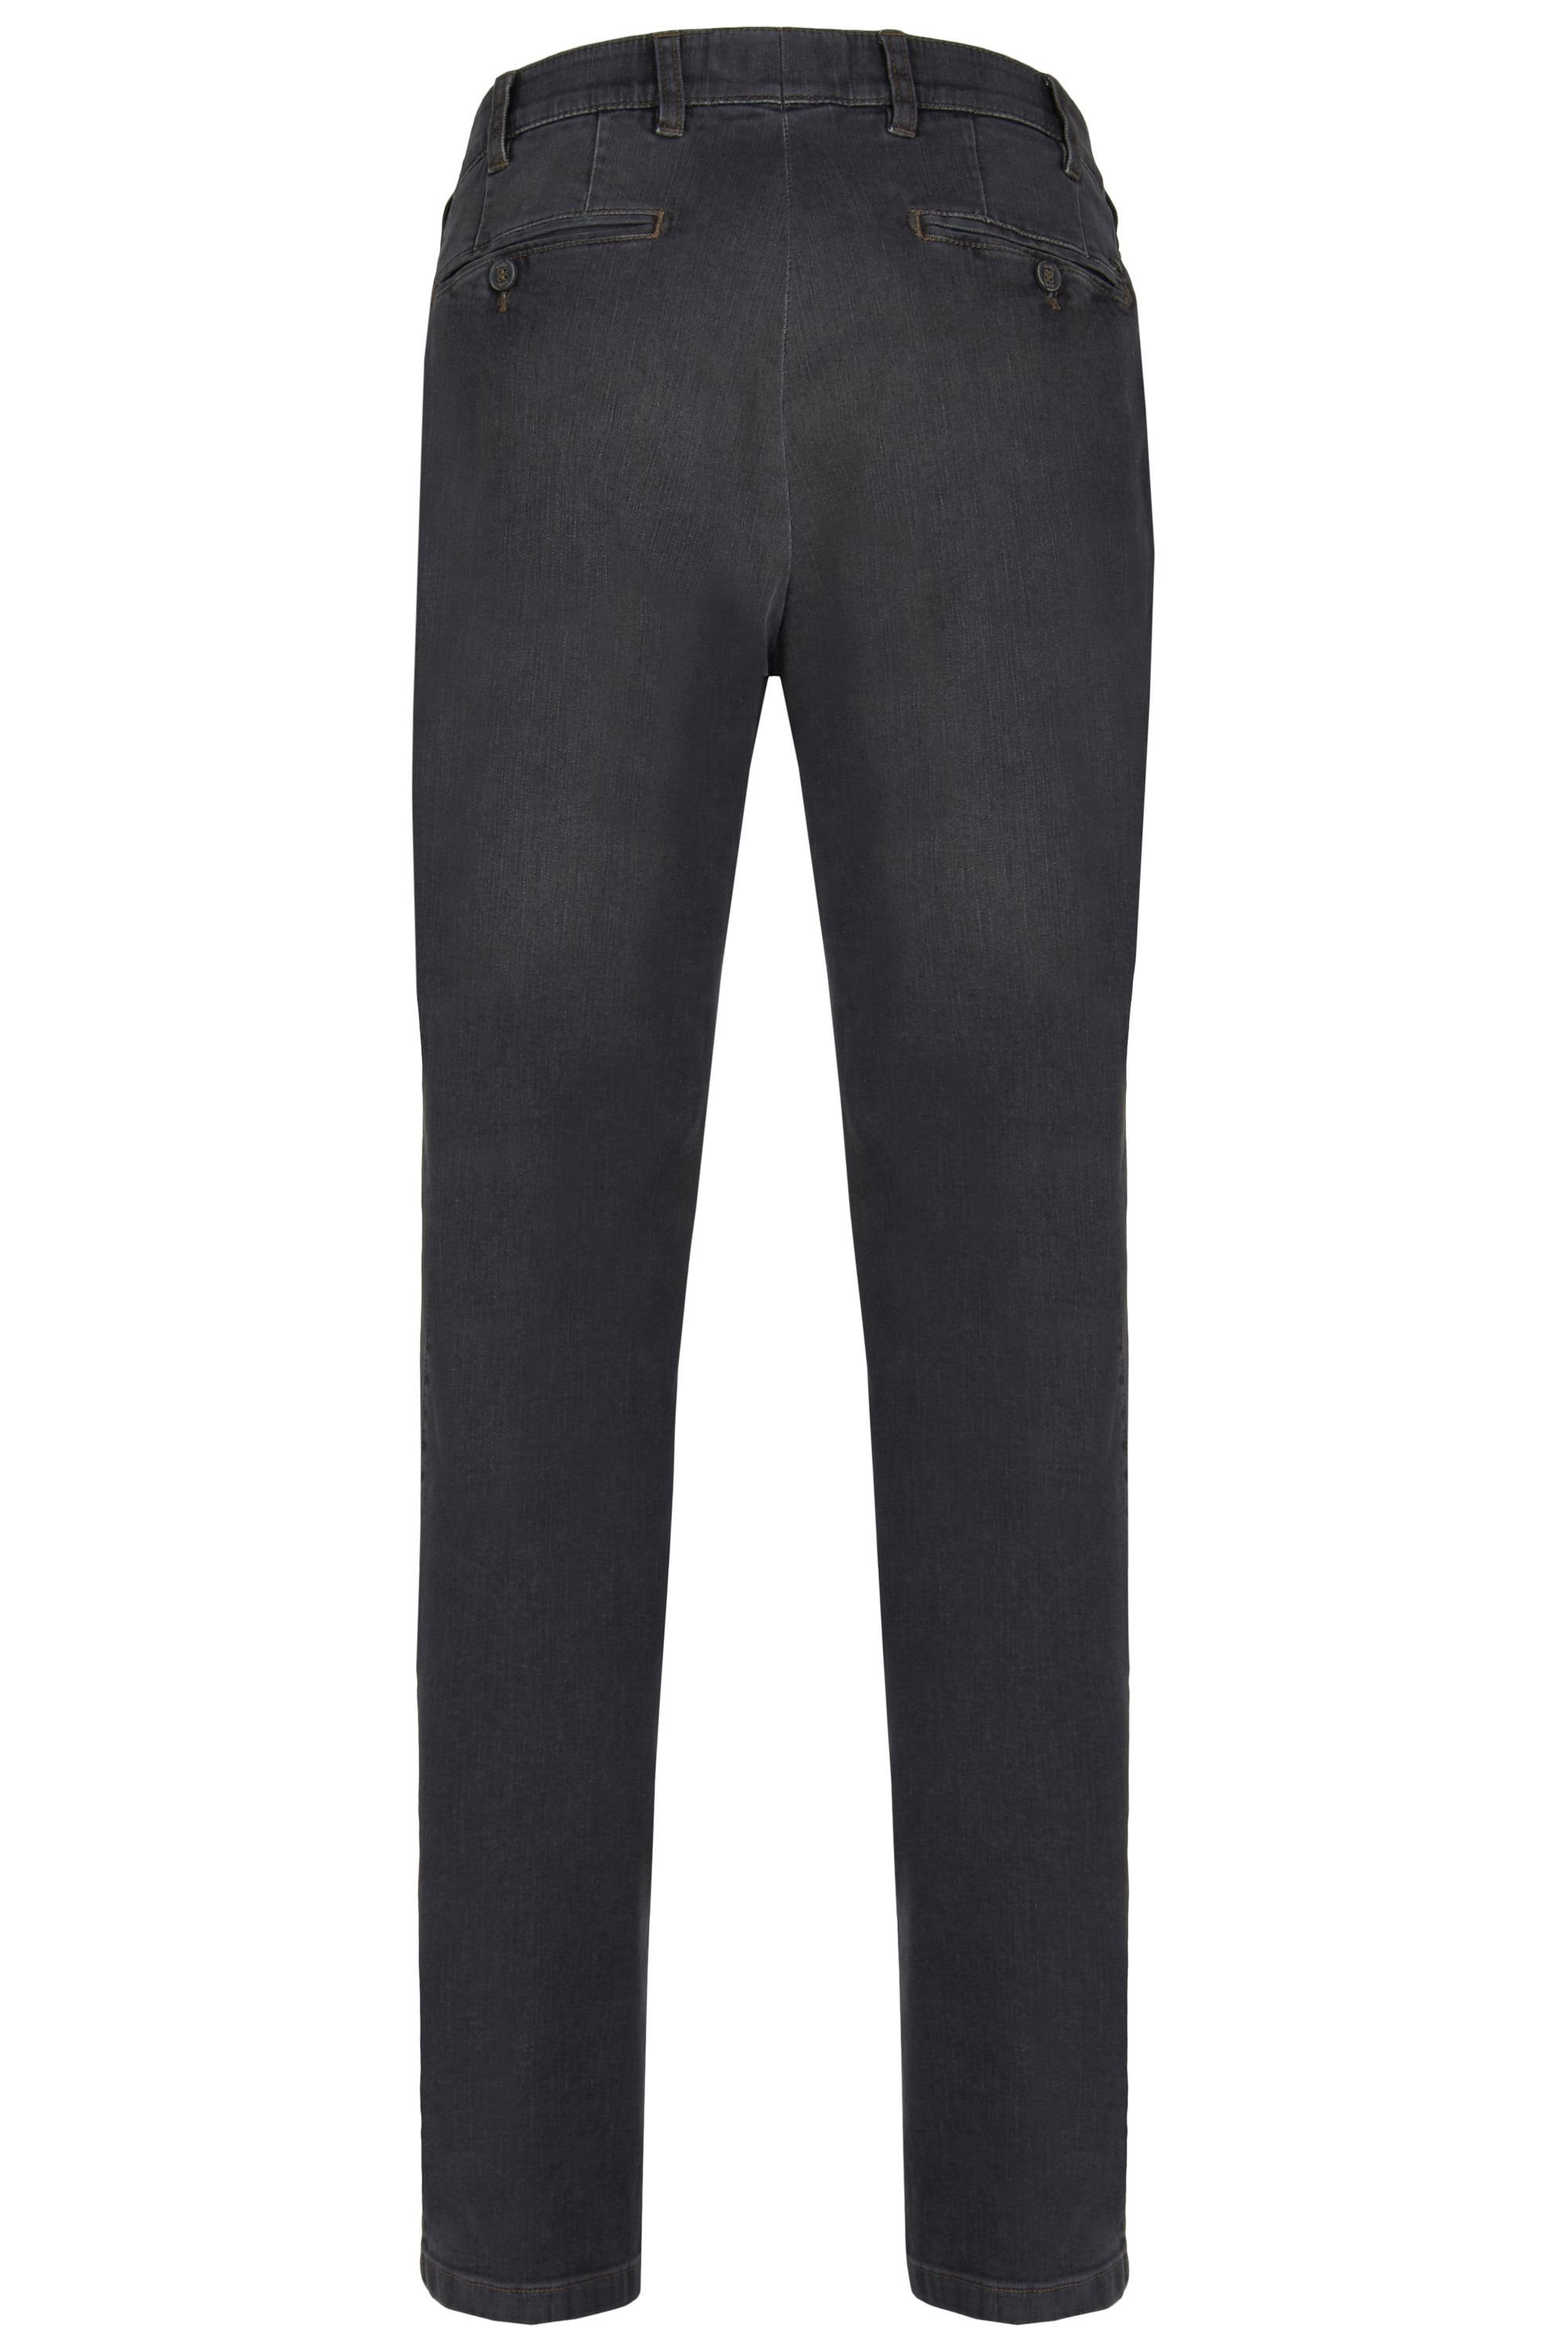 Hose Modell grey soft (53) Jeans aubi: Fit Herren used 526 Baumwolle Perfect Bequeme aubi High Flex Jeans aus Stretch